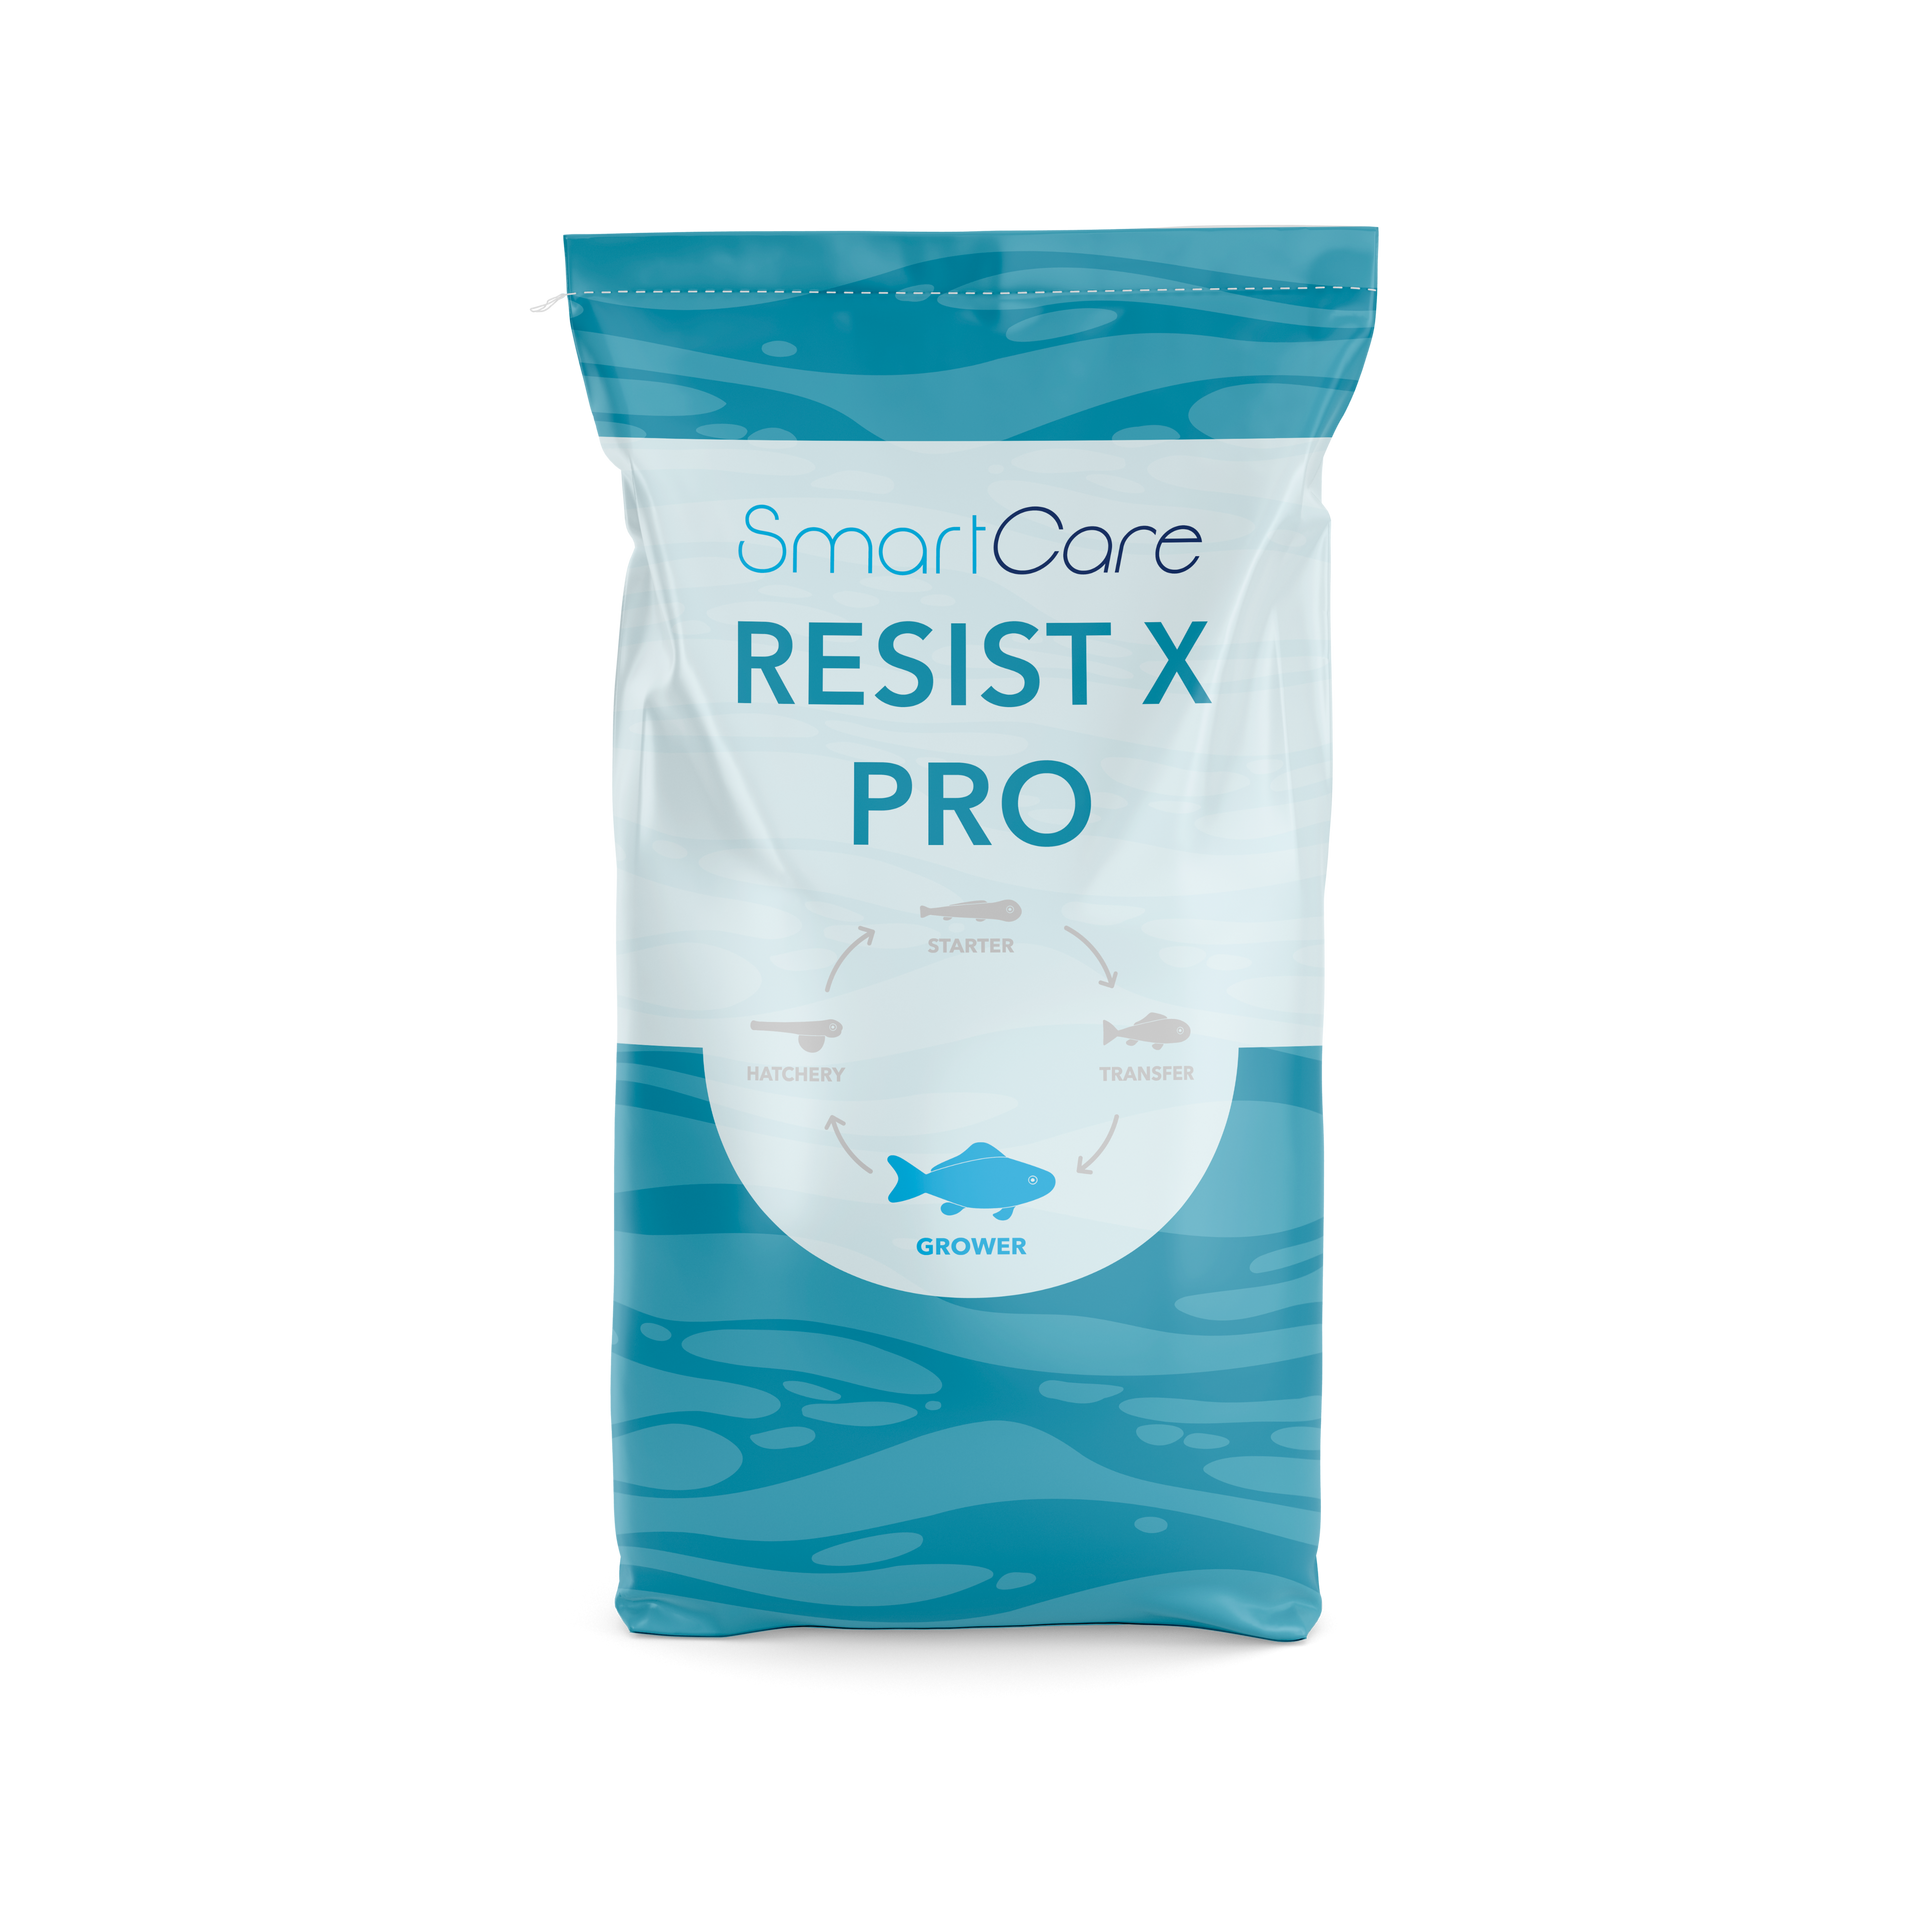 SmartCare Resist X Pro health feed for atlantic salmon